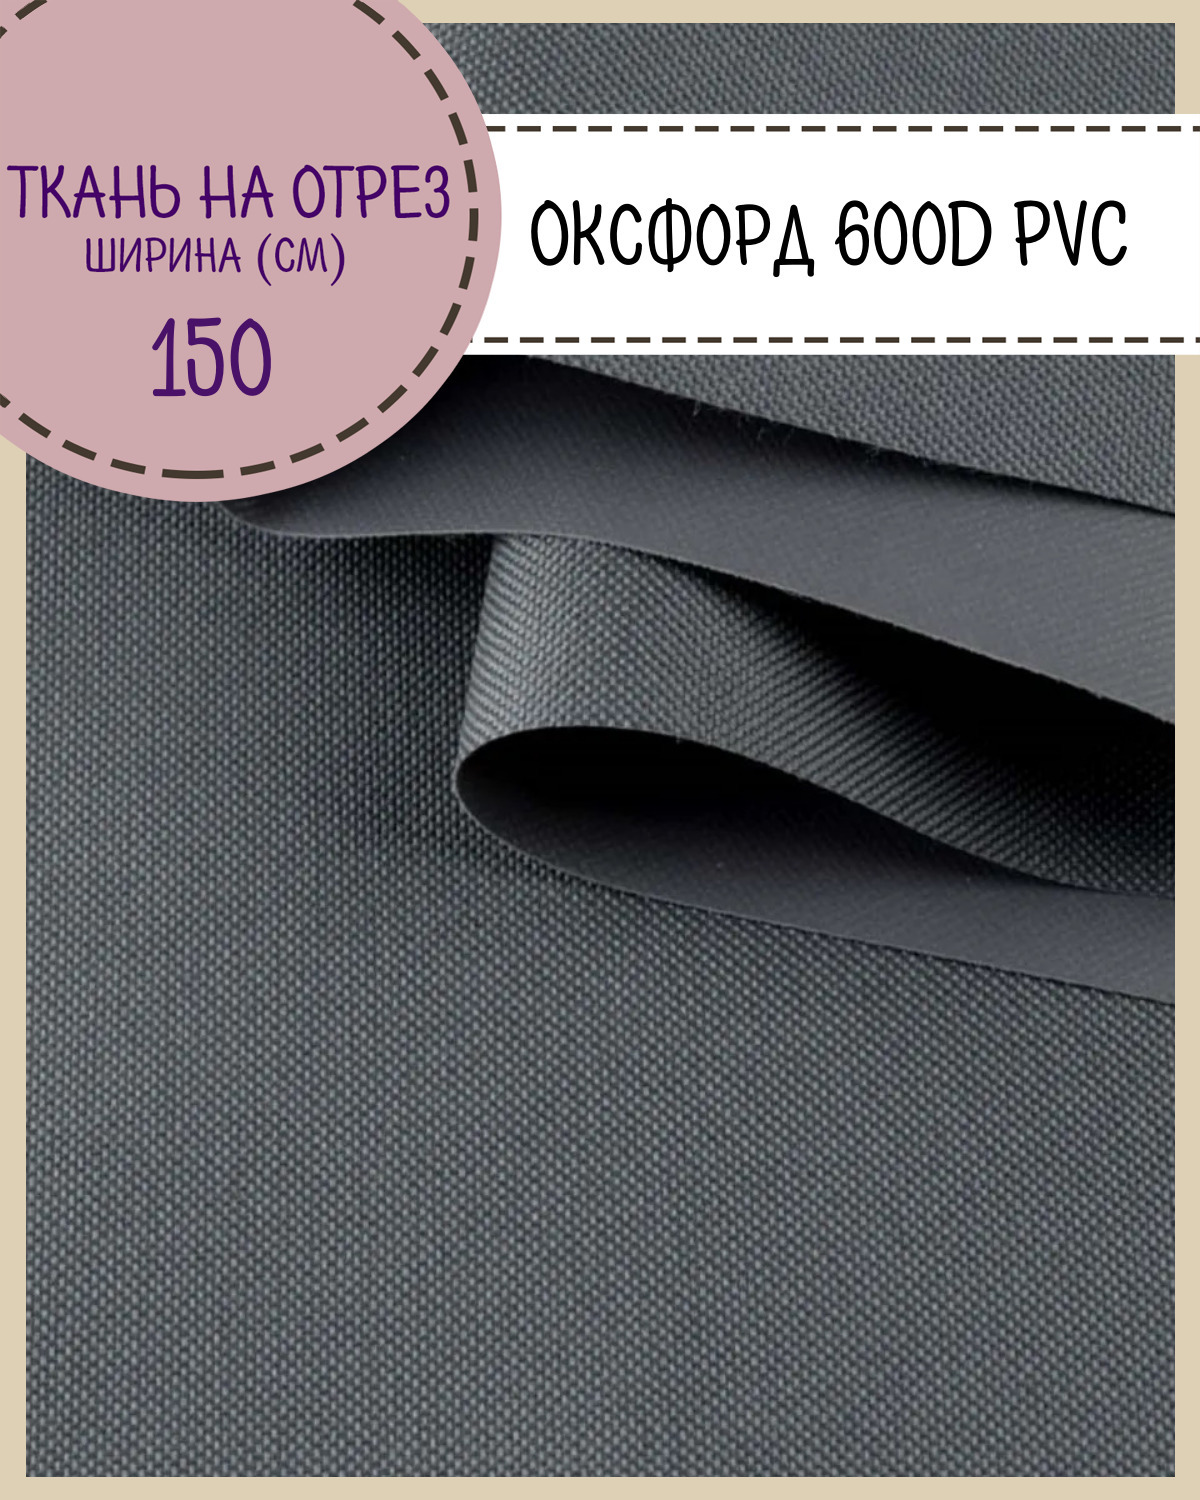 Ткань Оксфорд Любодом 600D PVC, водоотталкивающая, цв. т. серый, на отрез, 150х100 см